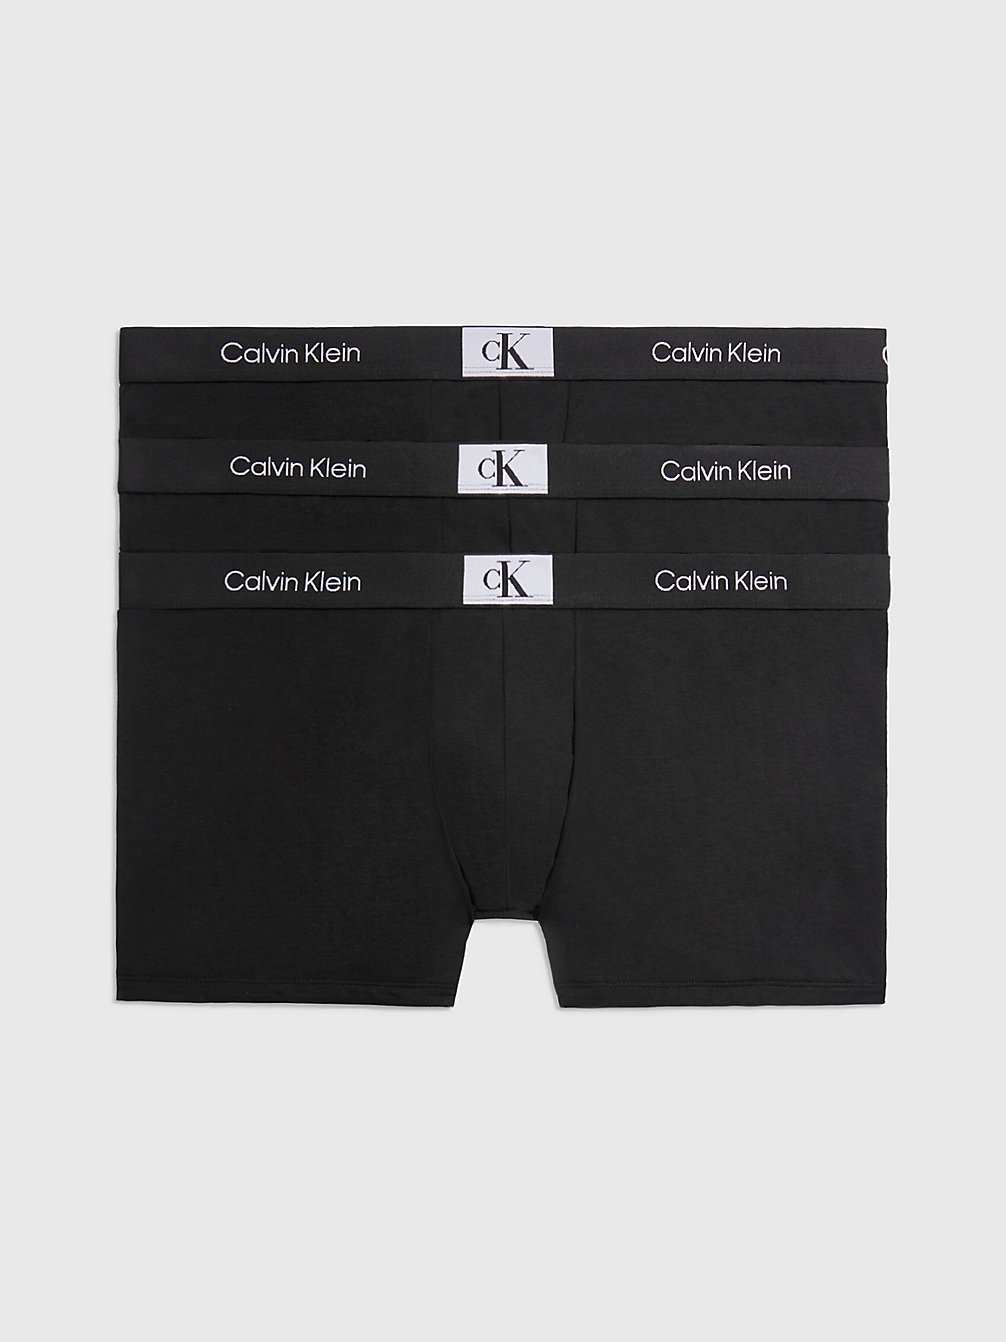 BLACK/BLACK/BLACK > 3-Er Pack Trunks In Übergröße - Ck96 > undefined Herren - Calvin Klein